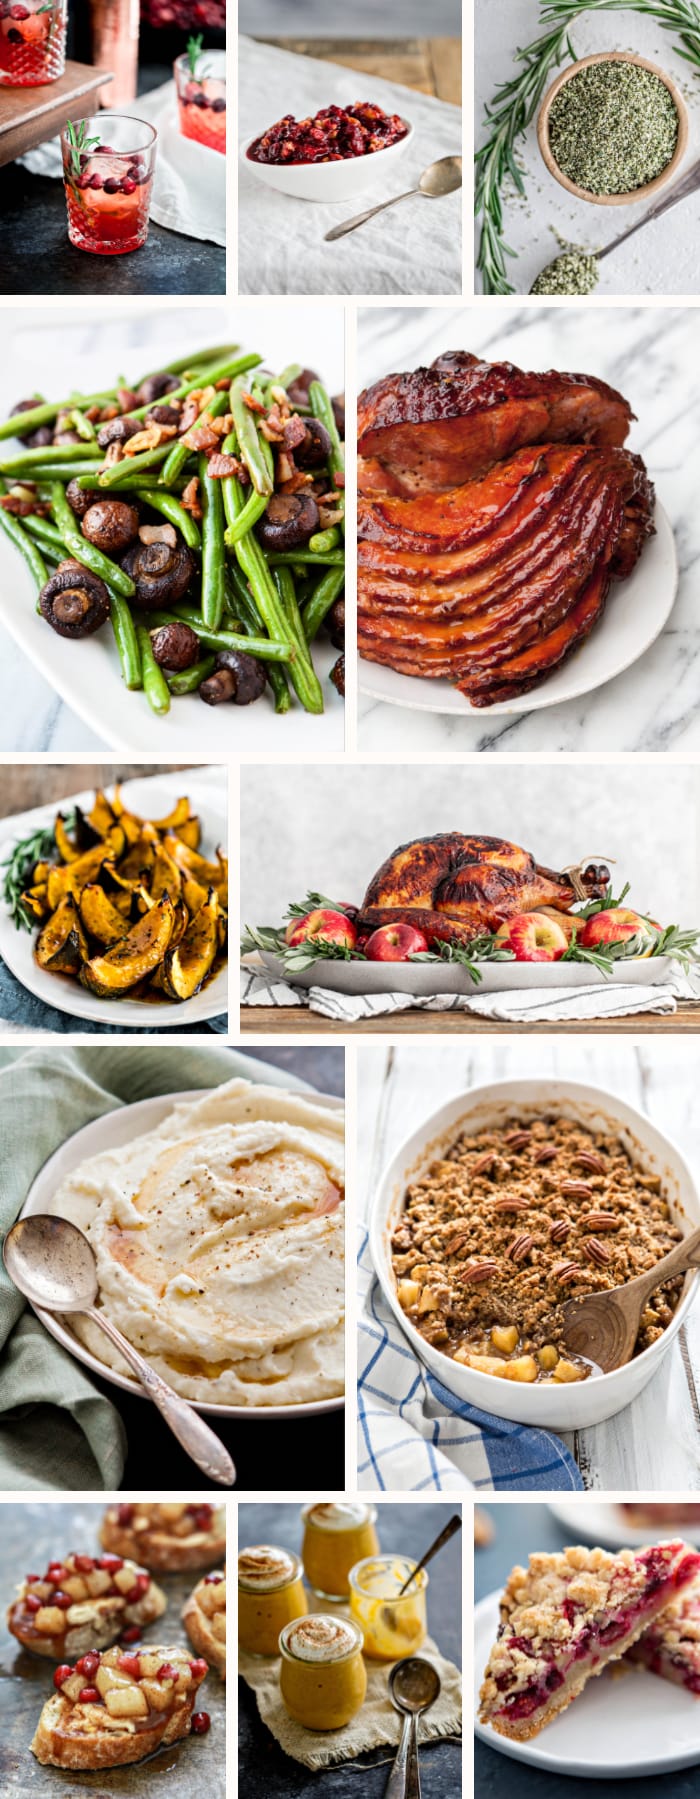 photos of recipe ideas for a thanksgiving menu